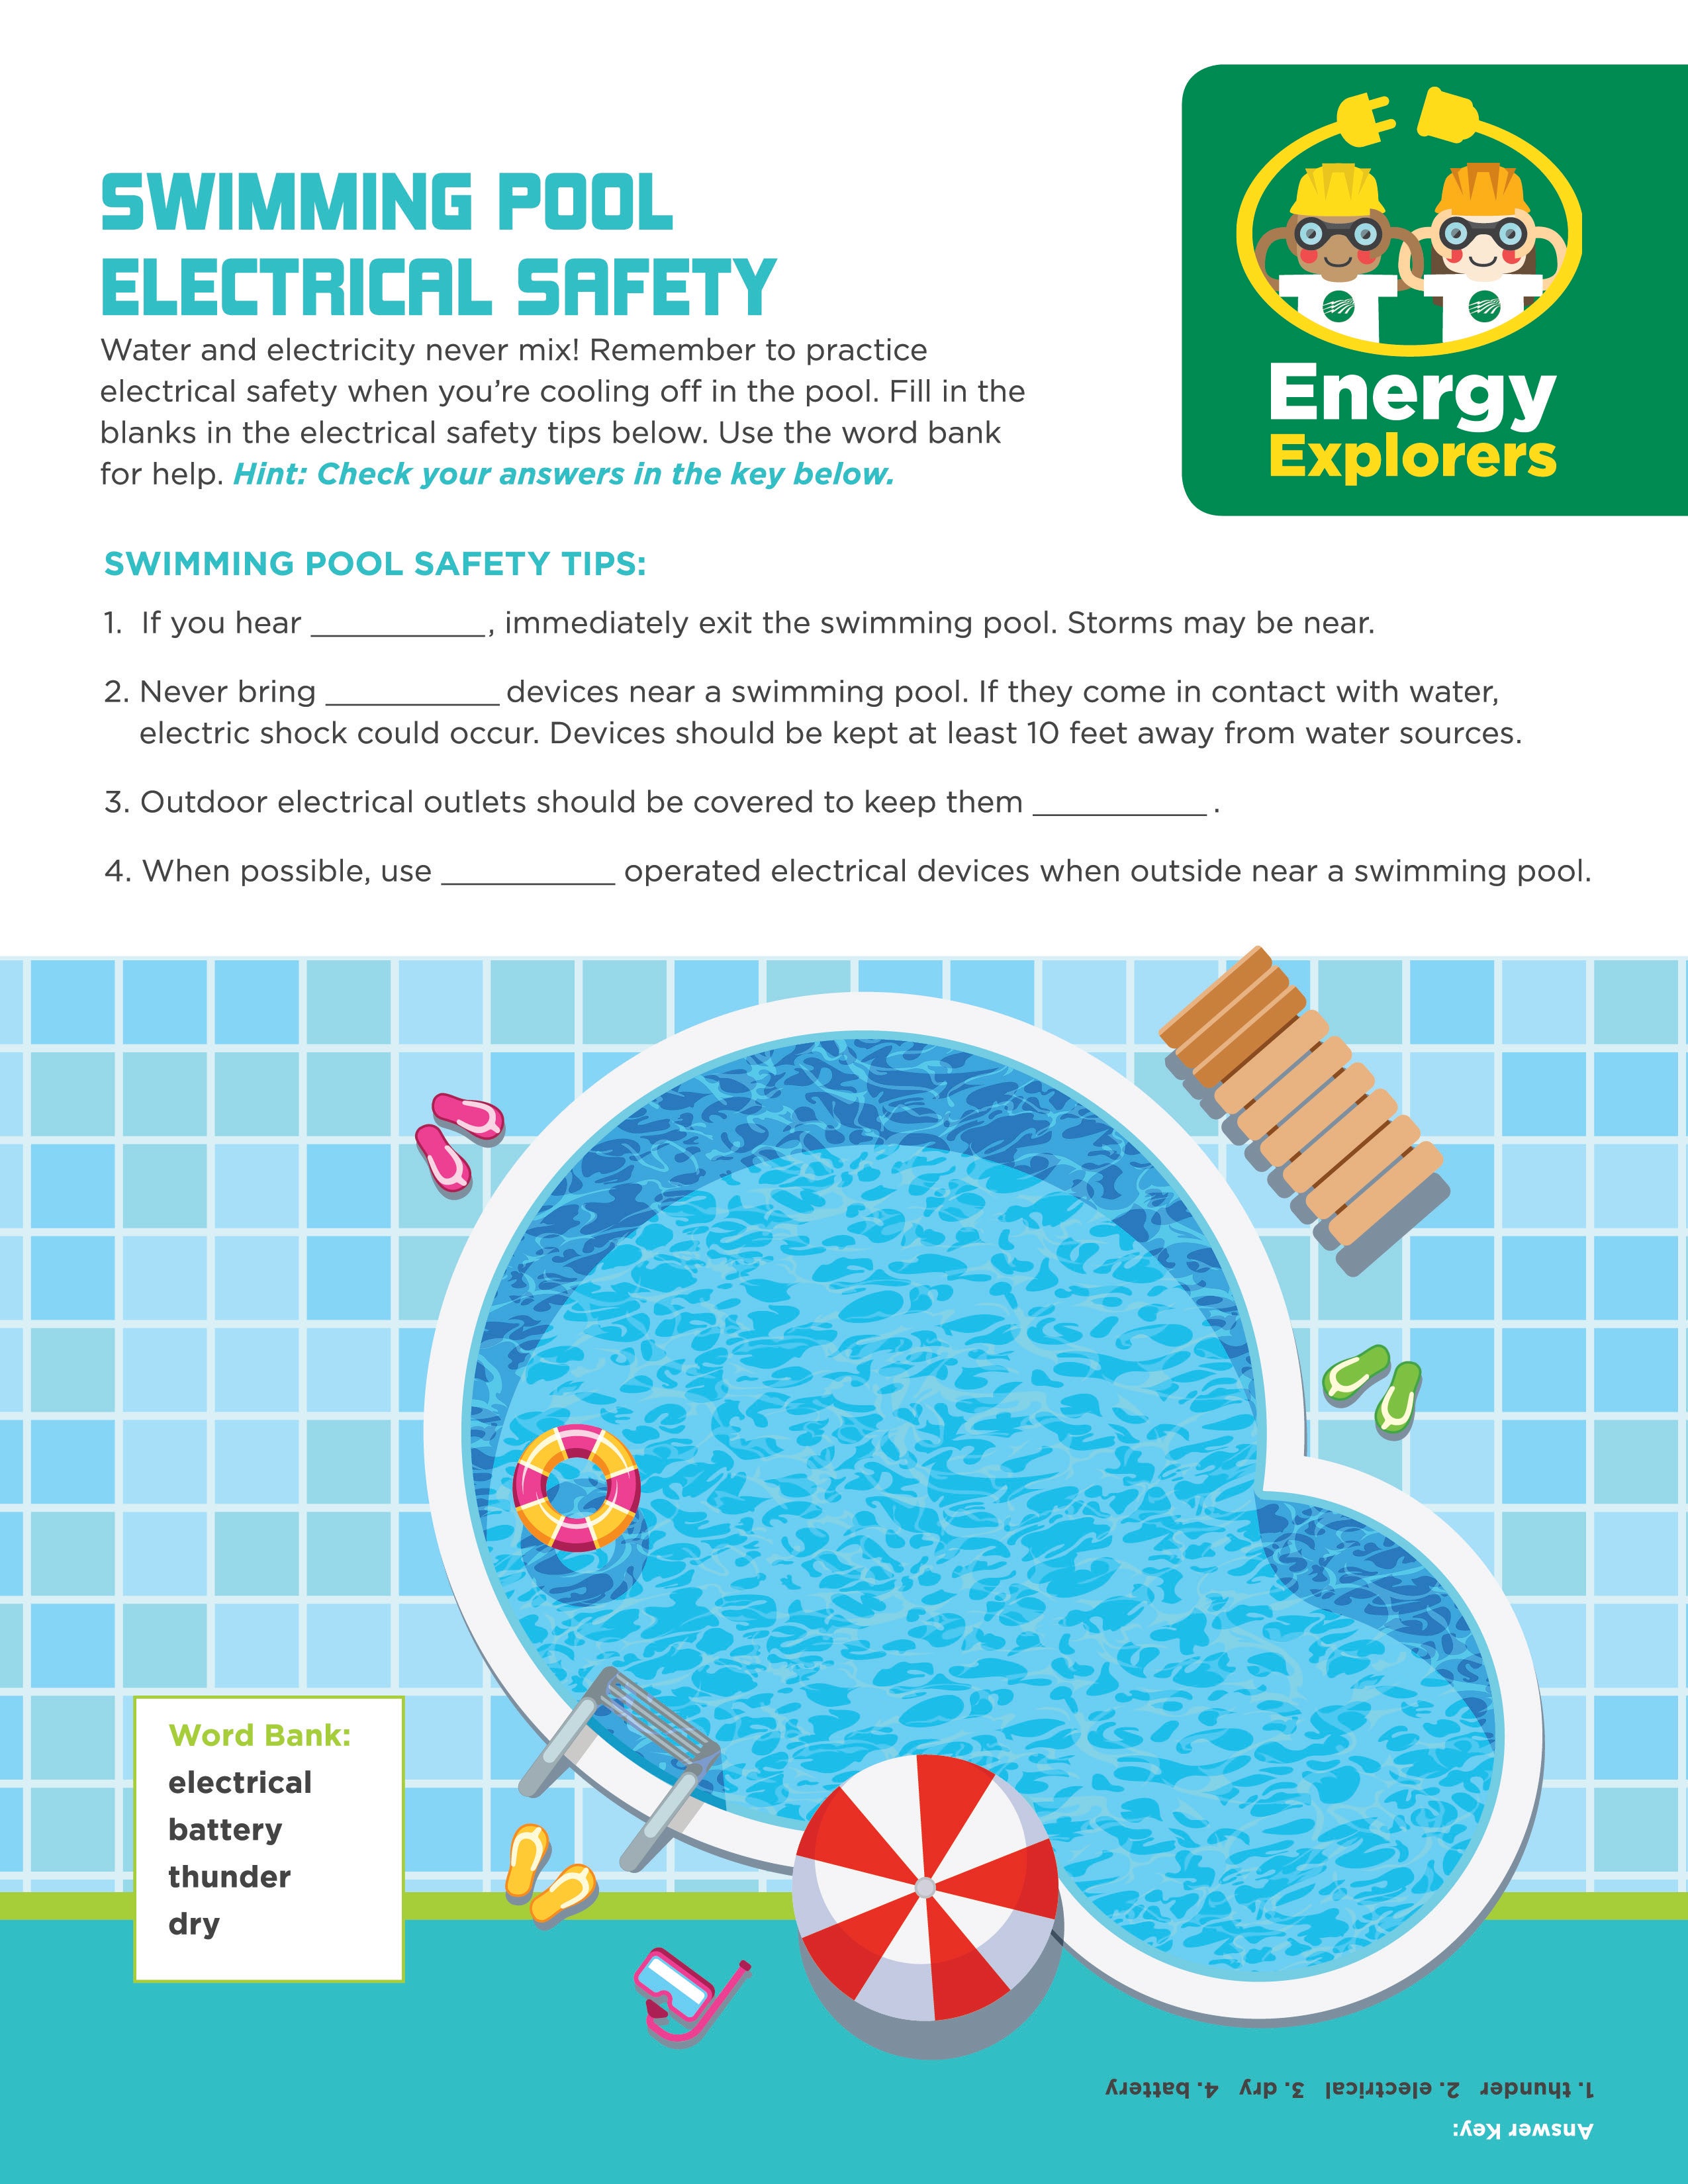 Energy Explorers Pool Safety